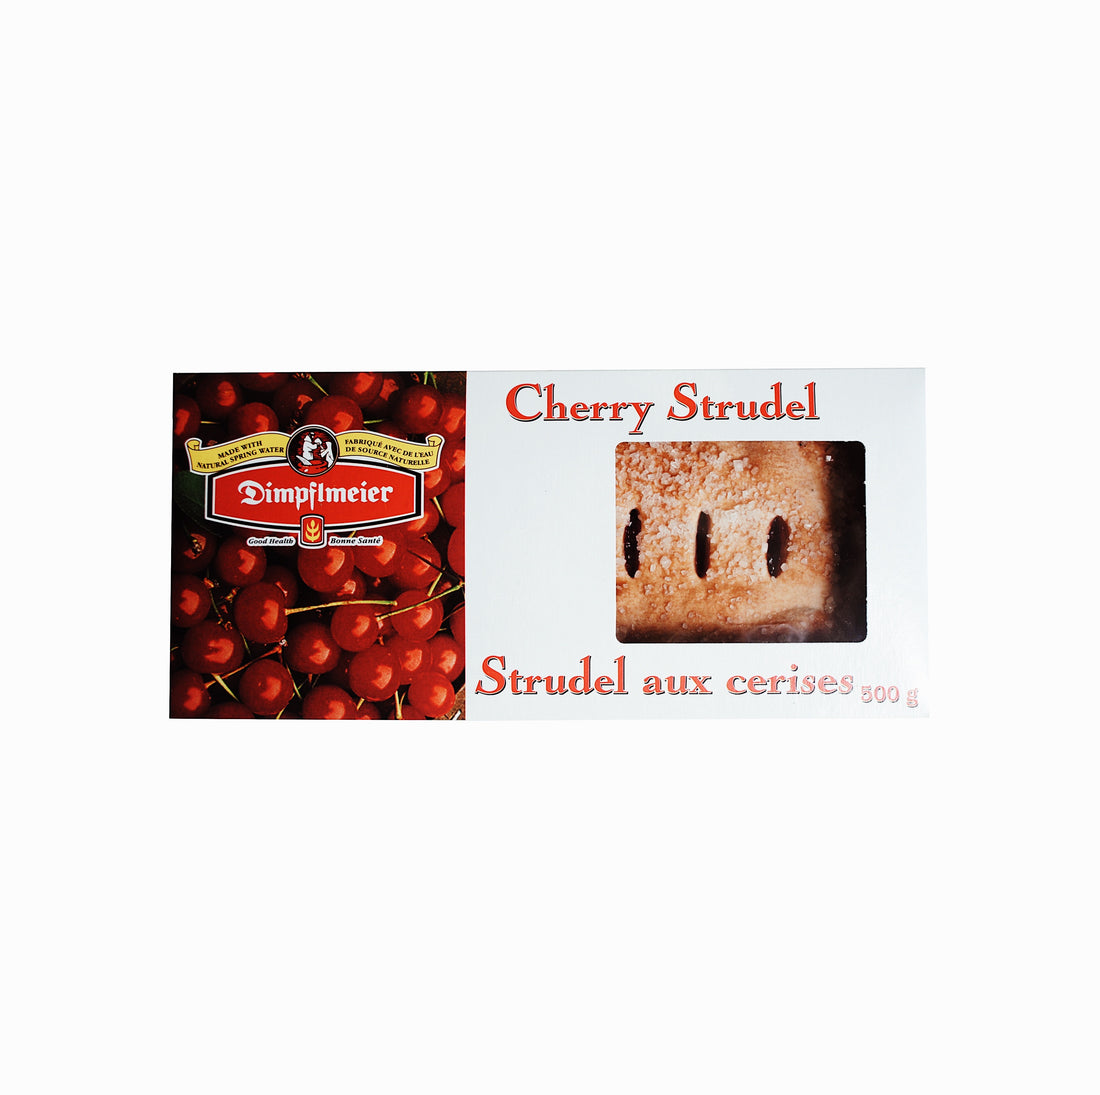 Cherry Strudel